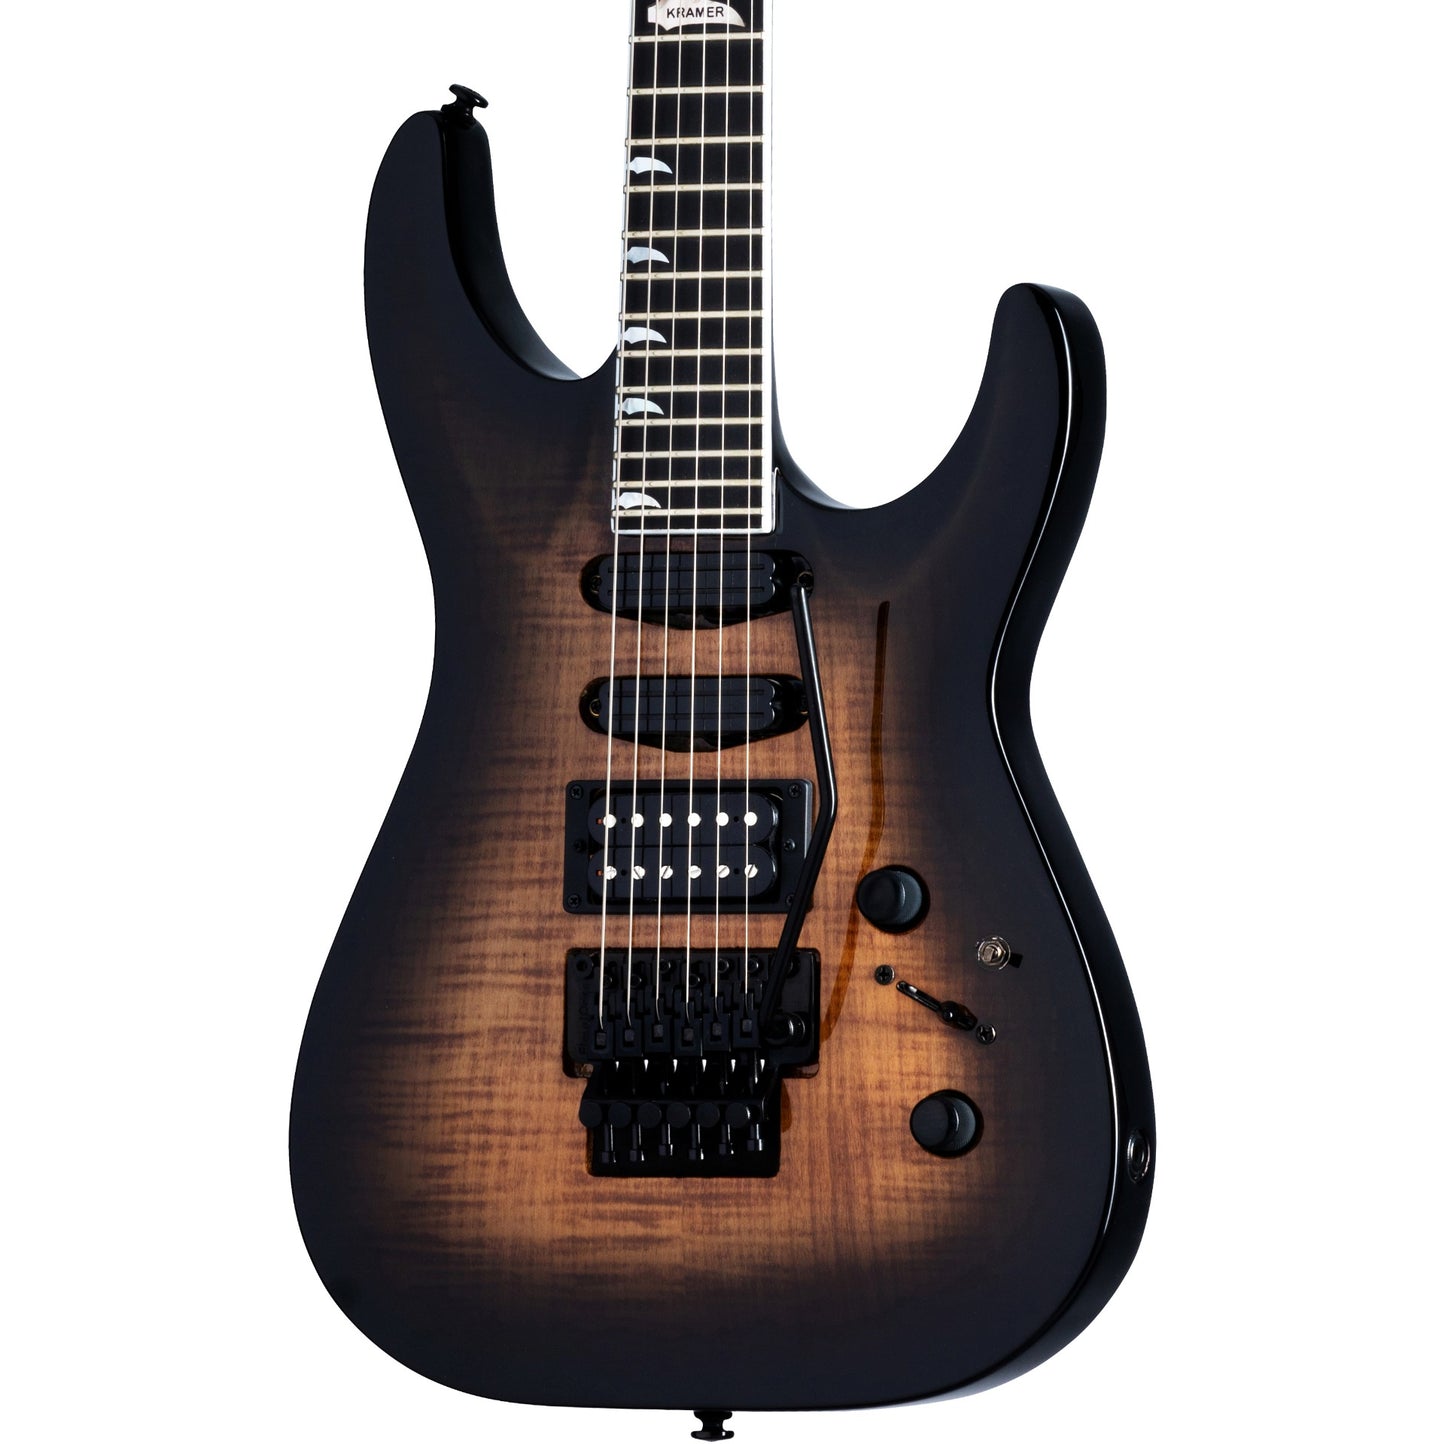 Kramer SM-1 Figured Electric Guitar in Black Denim Perimeter